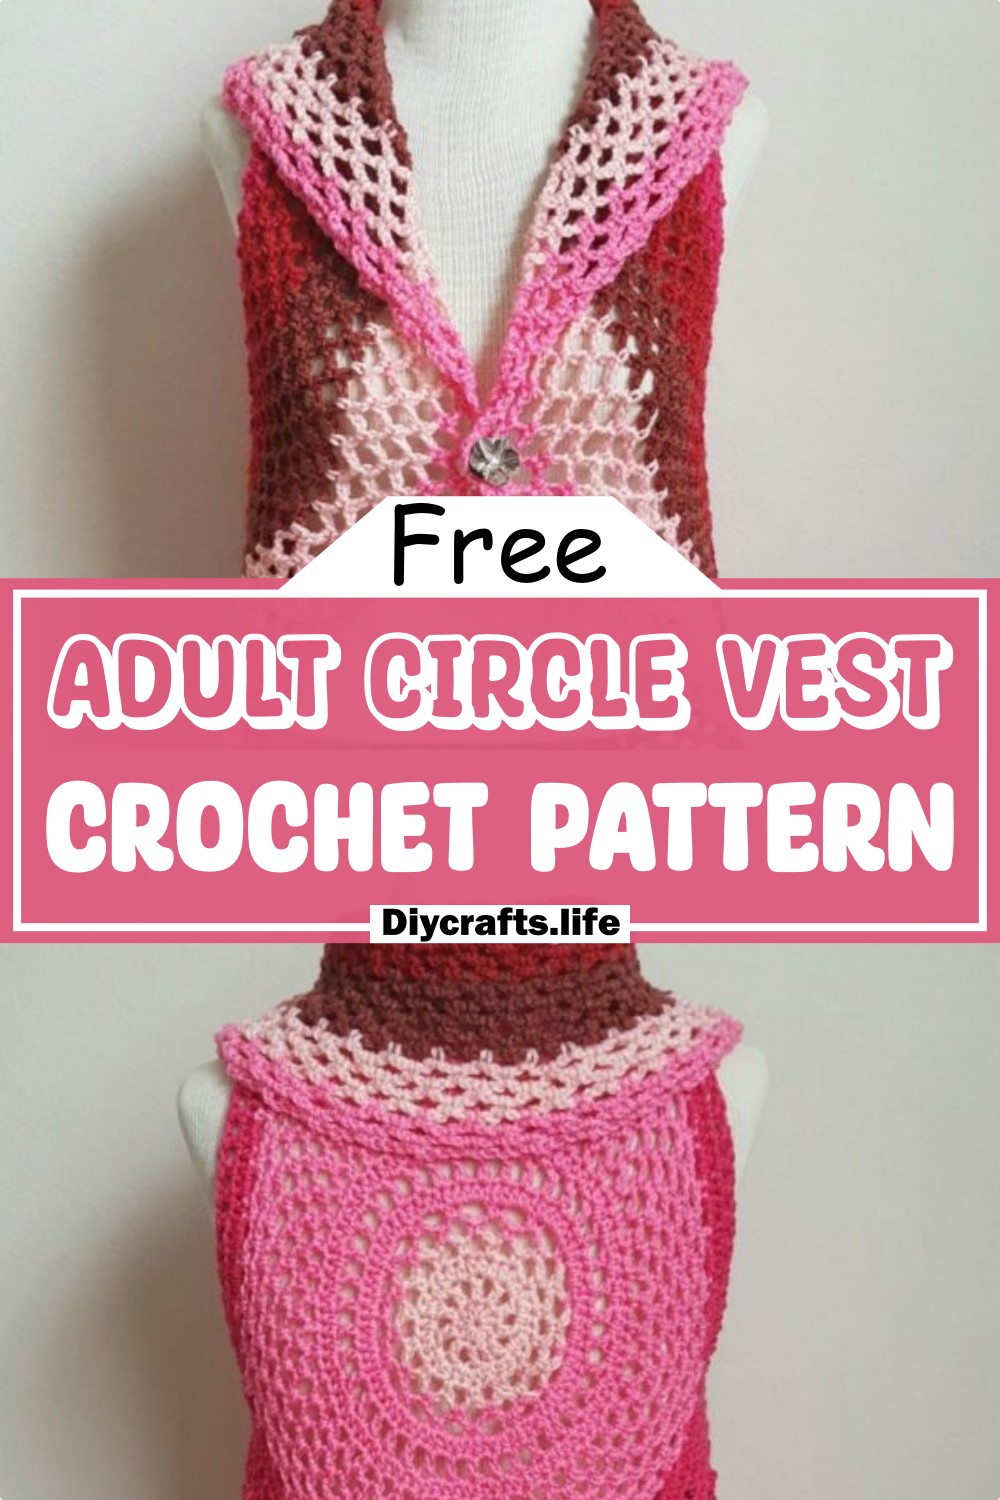 Adult Circle Vest Crochet Pattern